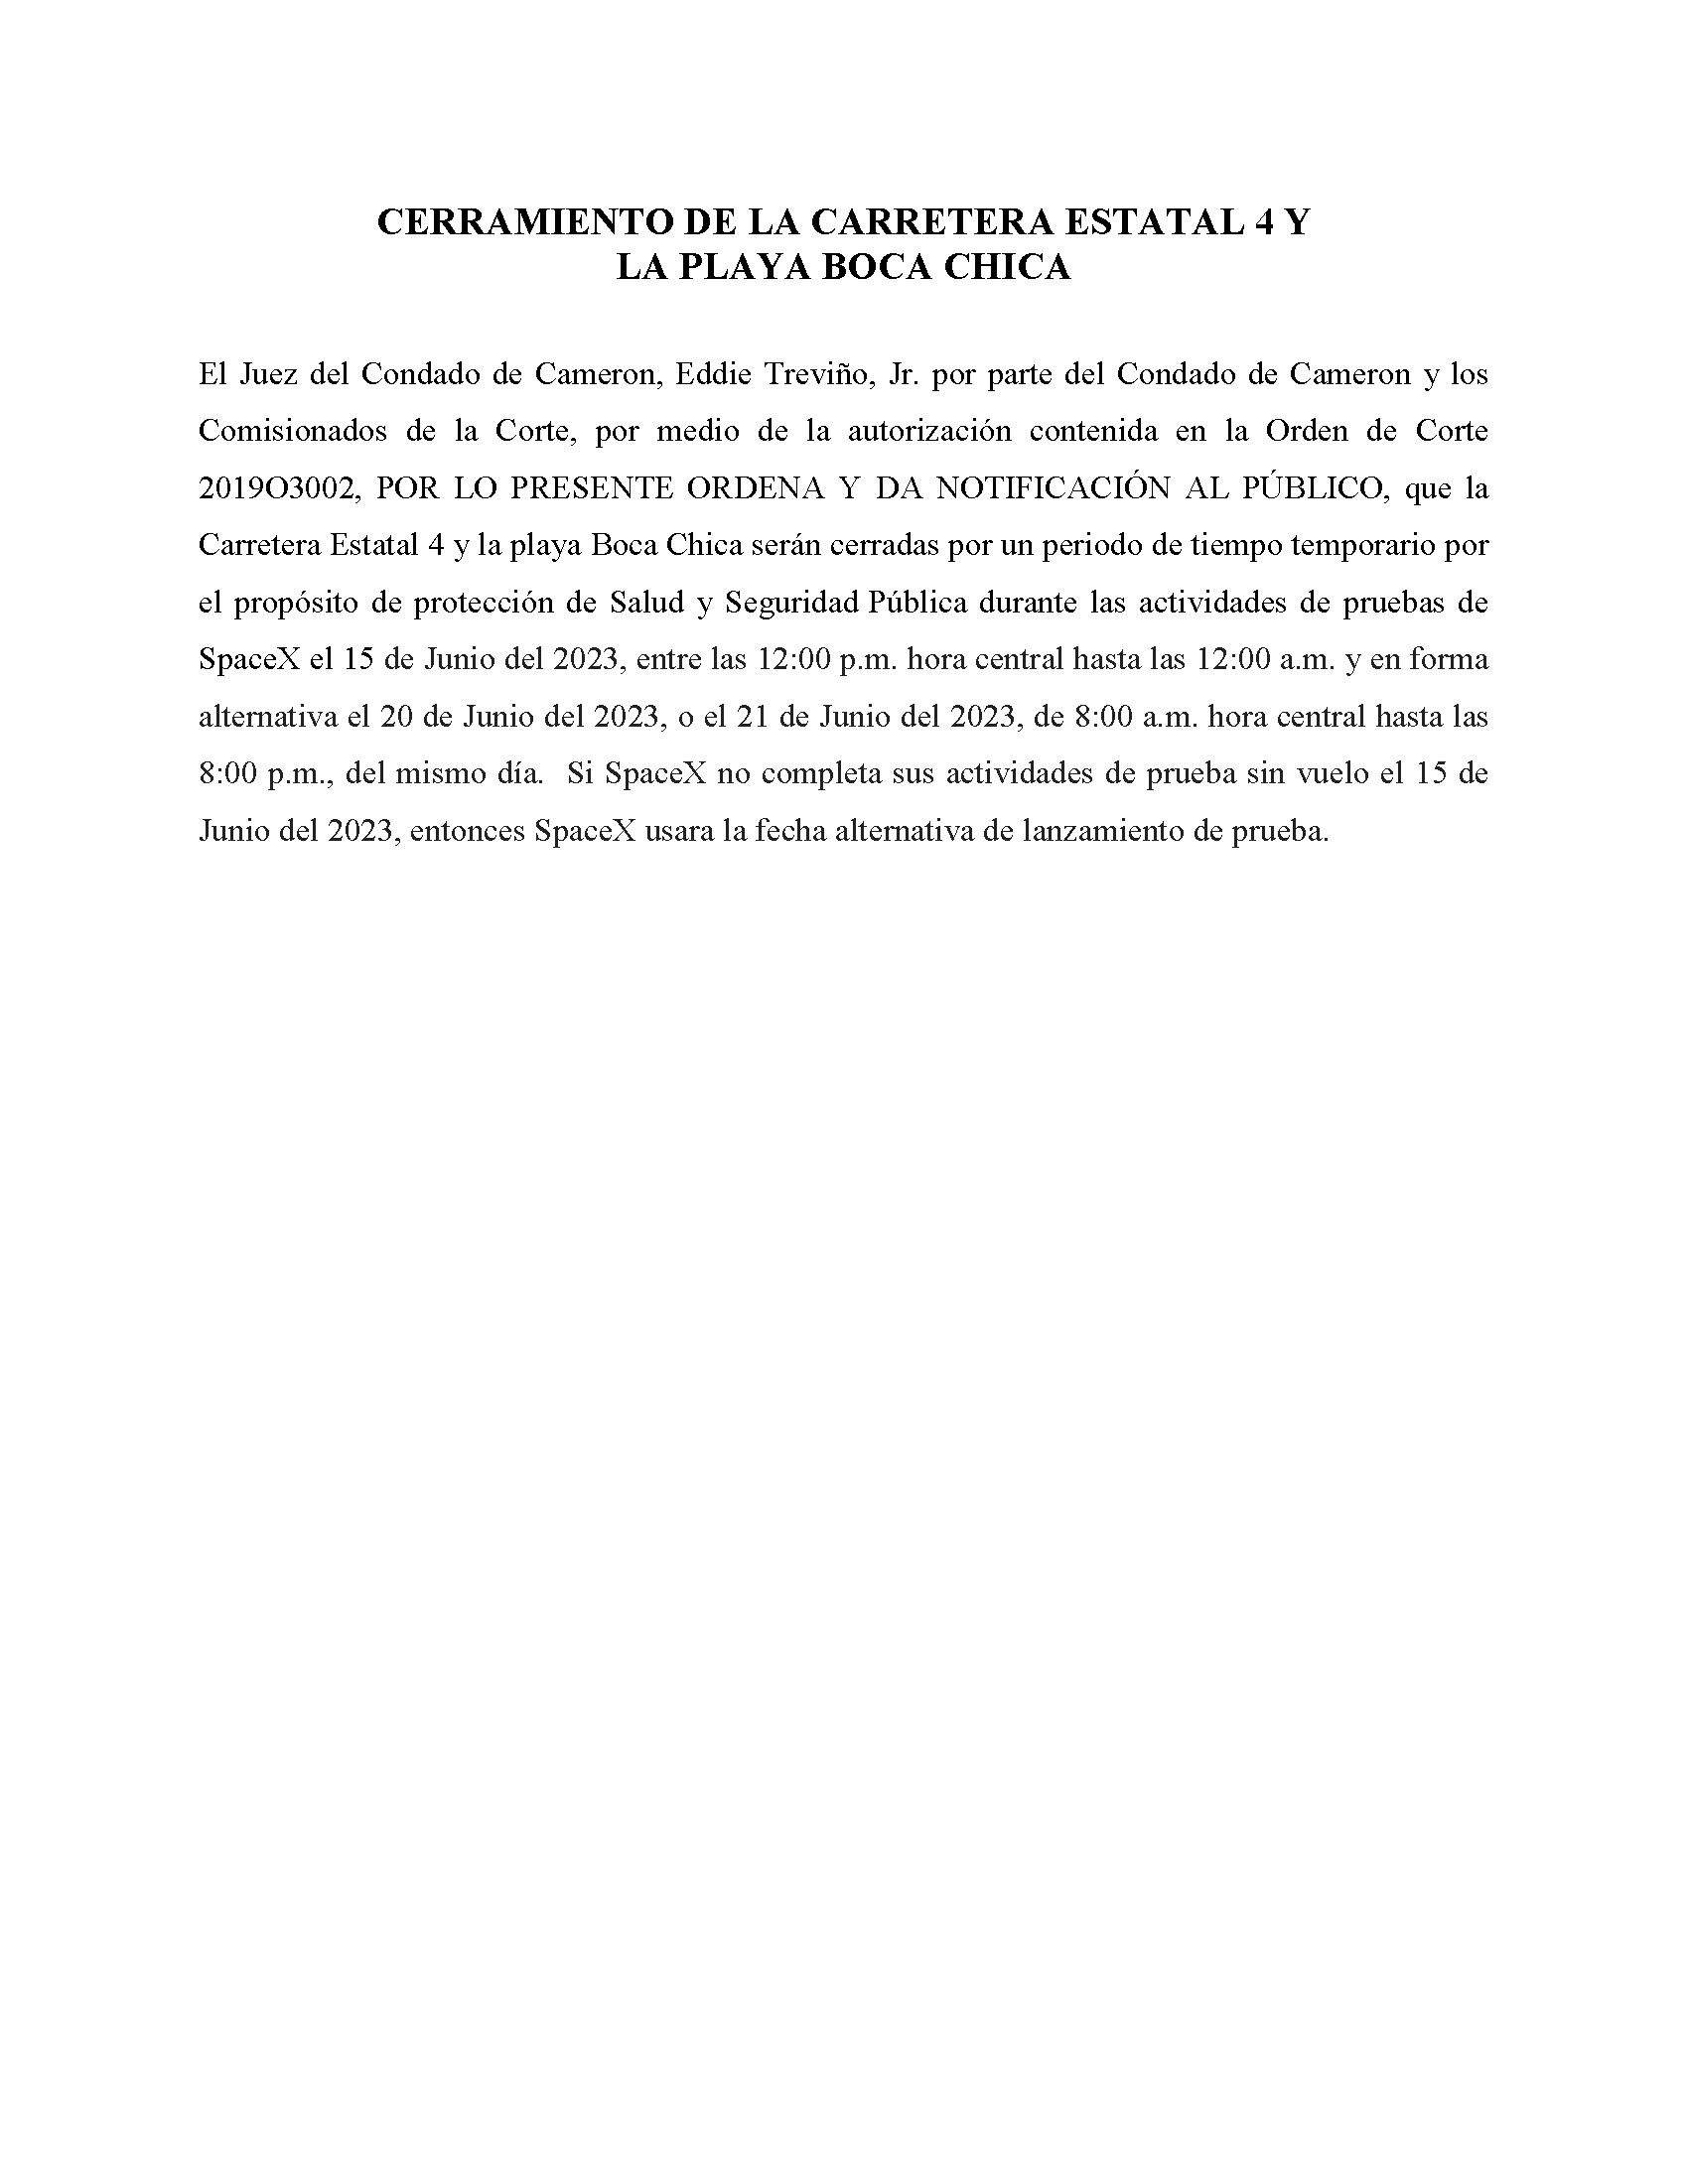 ORDER.CLOSURE OF HIGHWAY 4 Y LA PLAYA BOCA CHICA.SPANISH.06.15.23